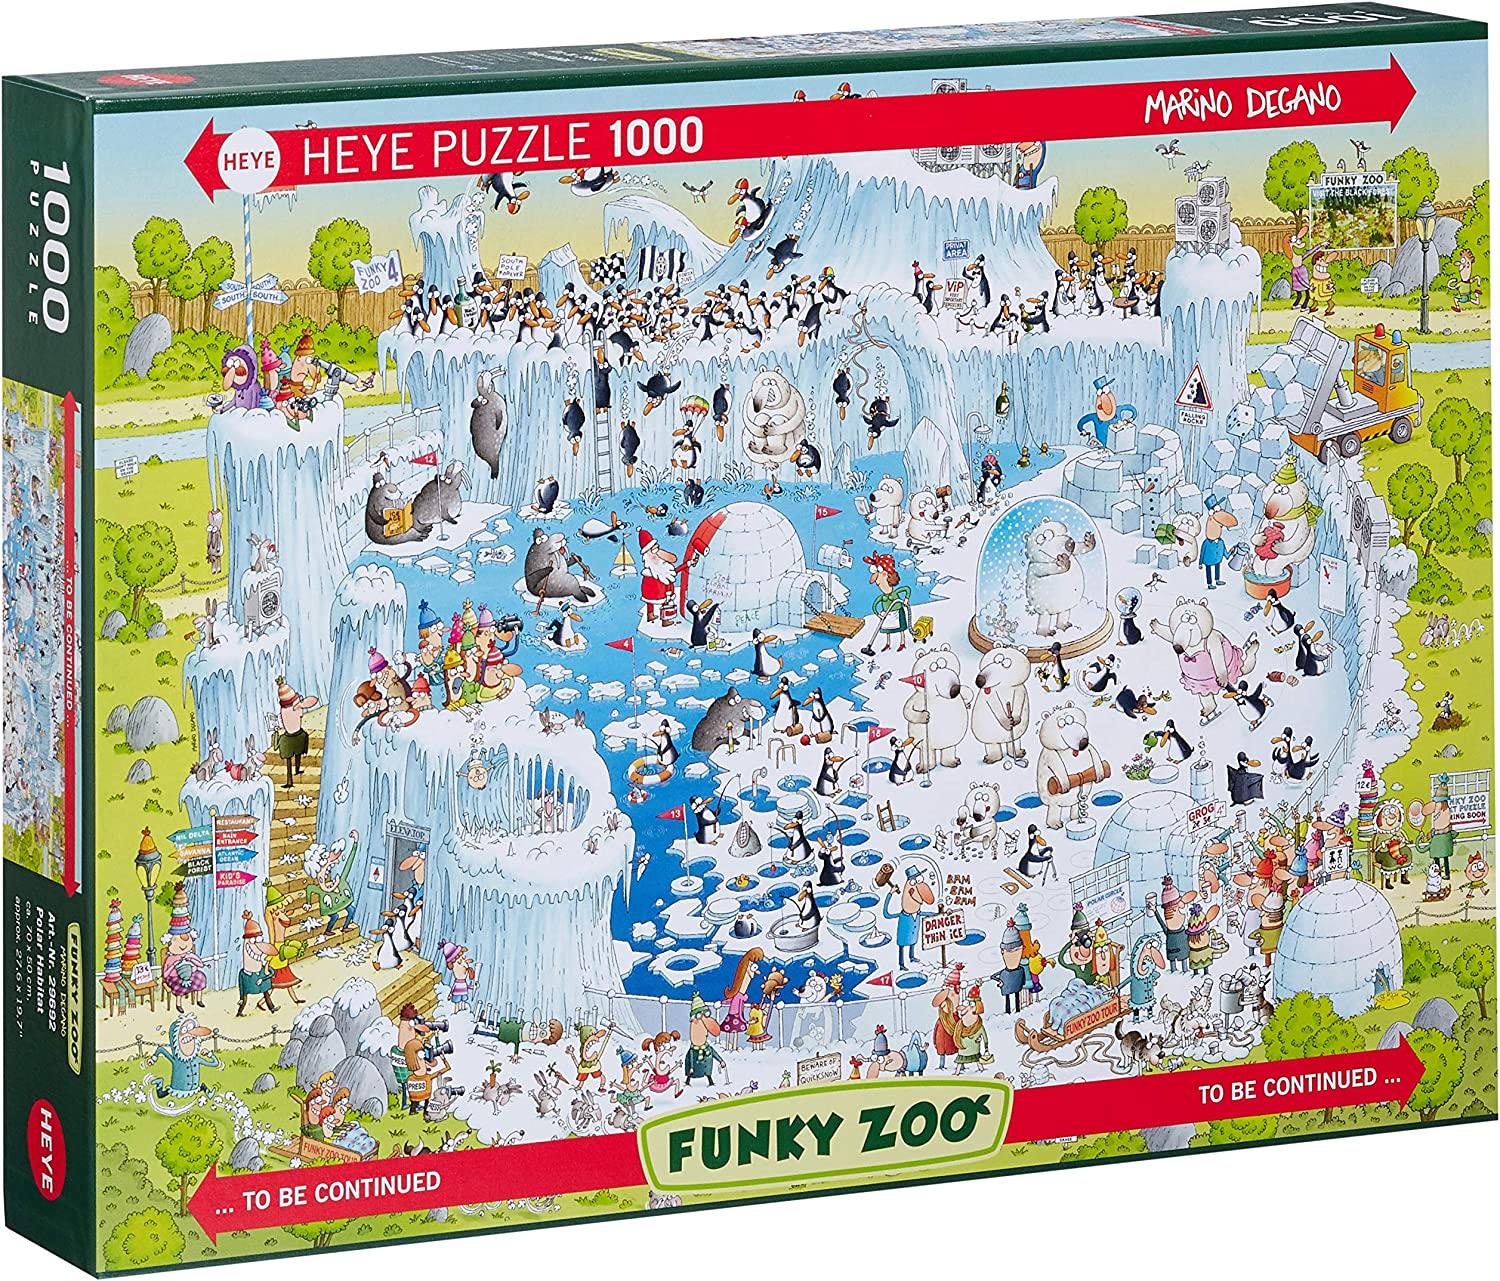 Heye Funky Zoo Polar Habitat, Degano Jigsaw Puzzle (1000 Pieces)